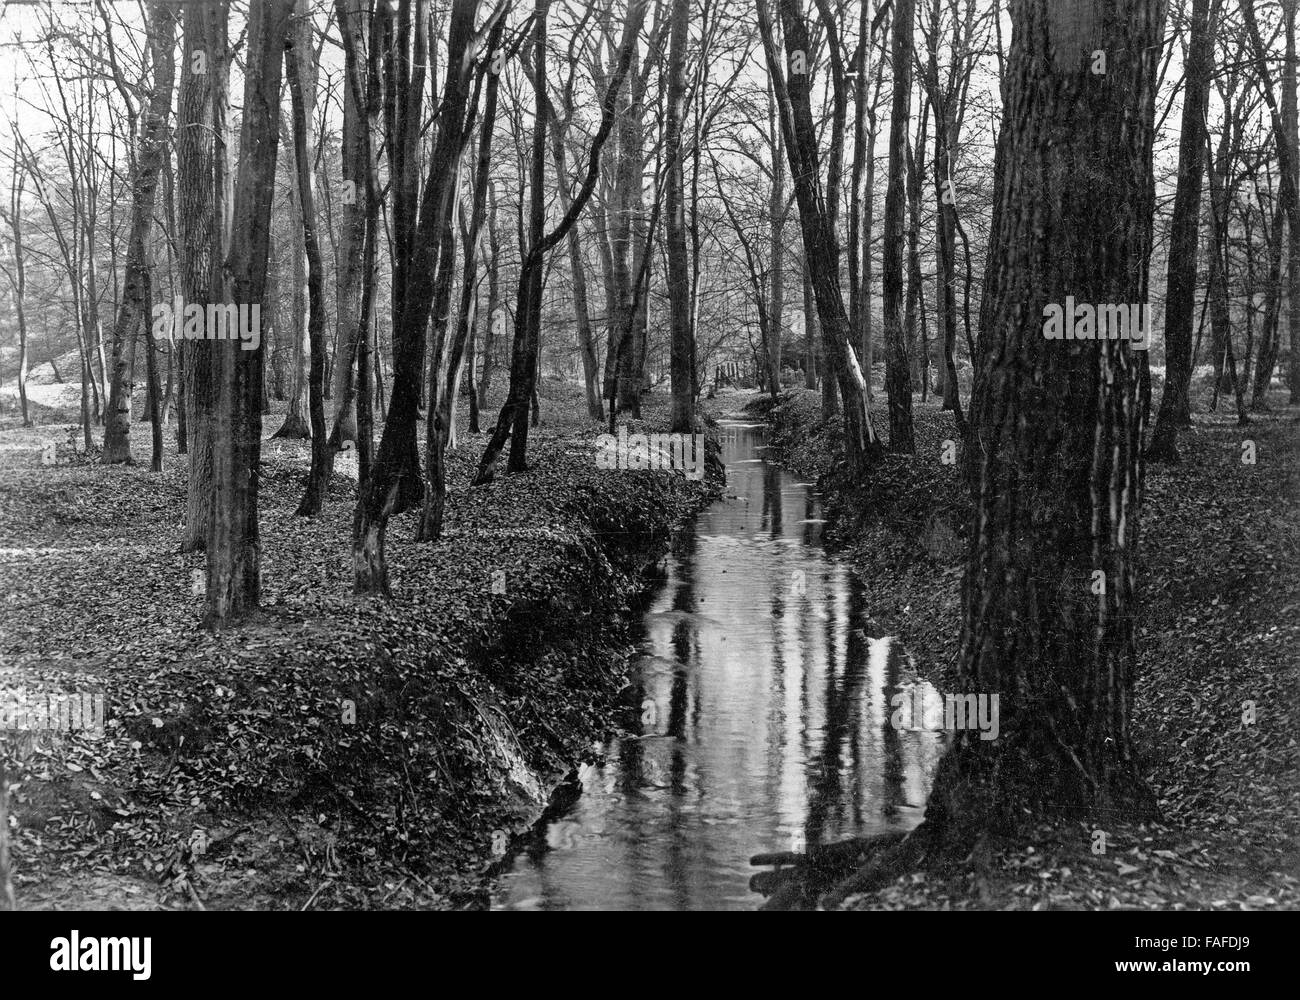 Impressione am Flehbach im rechtsrheinischen Köln, Deuschland 1920er Jahre. A flusso Flehbach sulla riva destra del fiume Reno a Colonia, Germania 1920s. Foto Stock